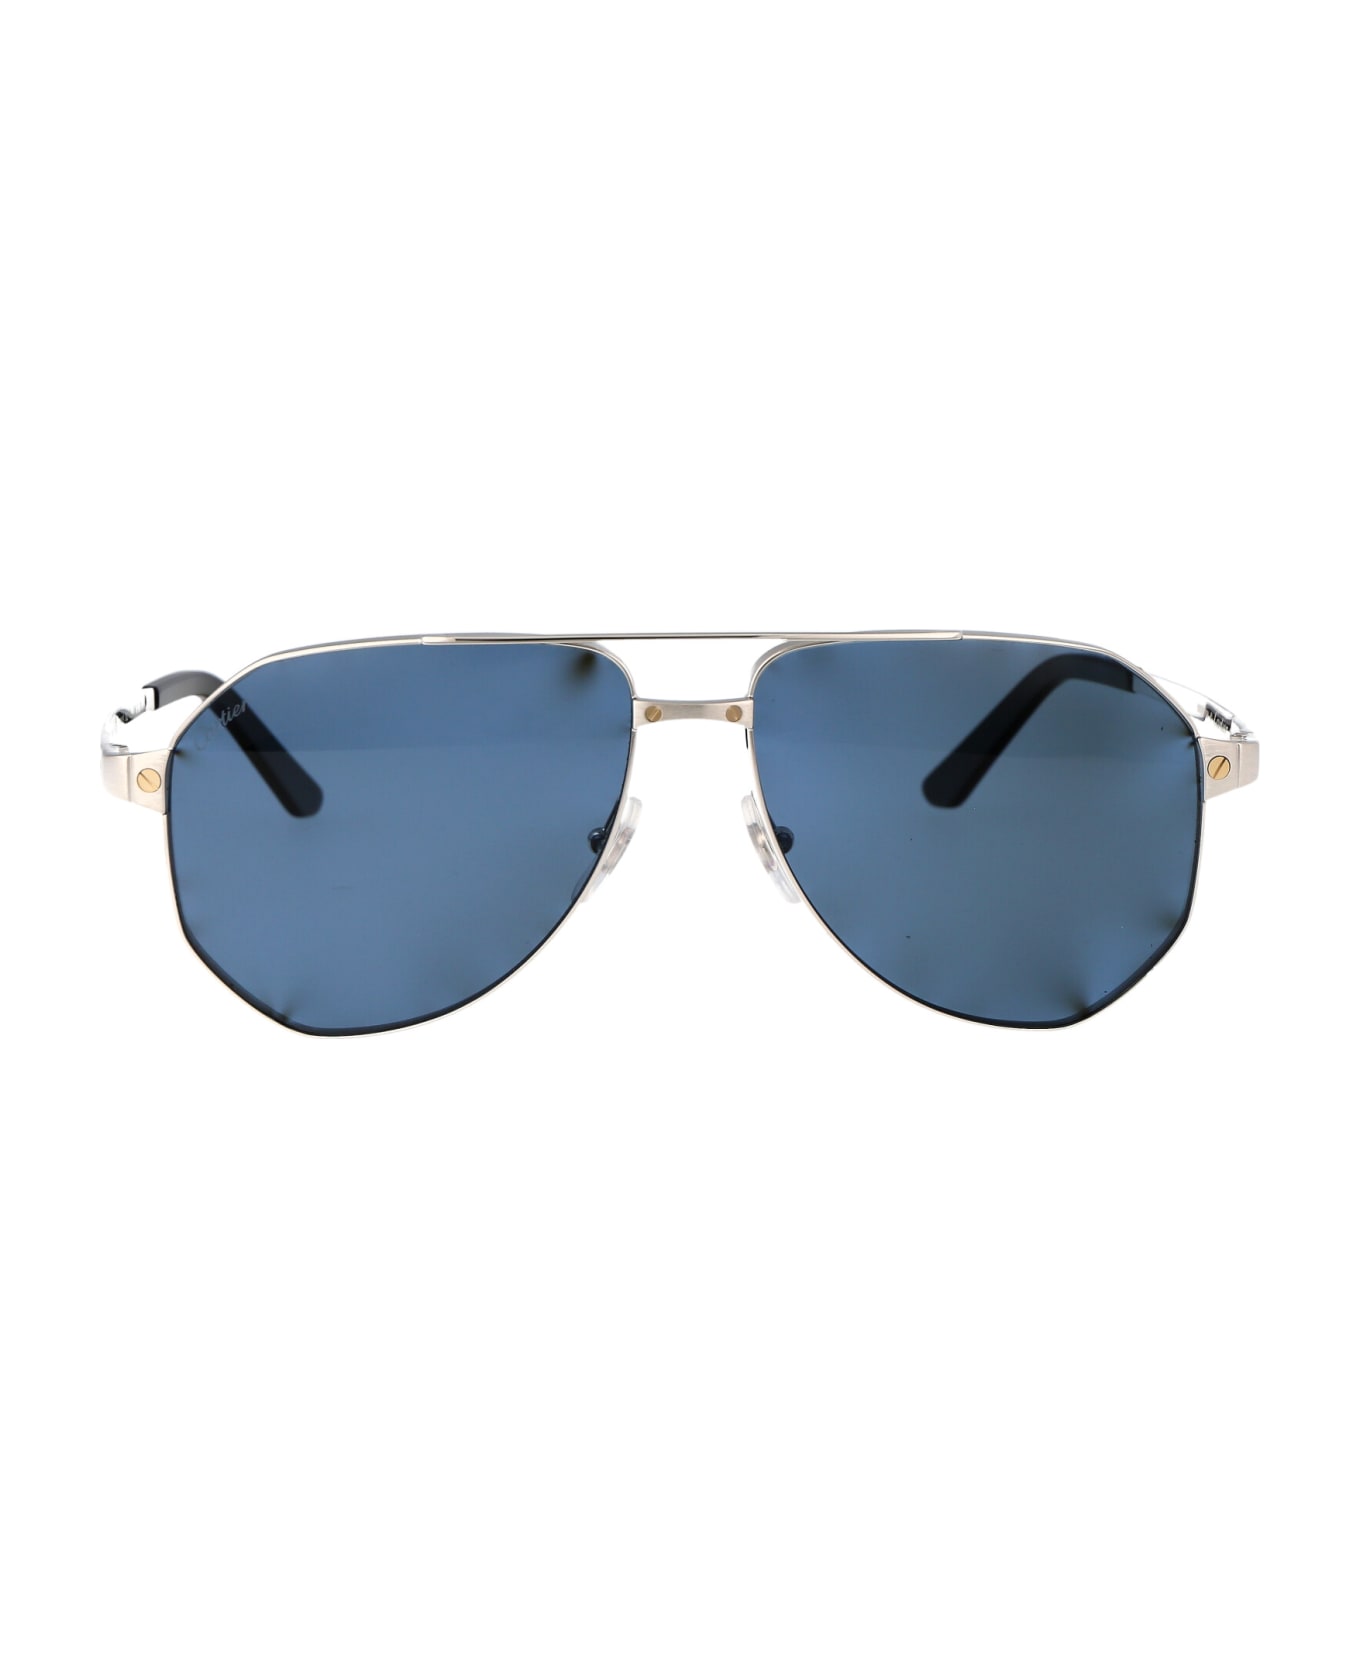 Cartier Eyewear Ct0461s Sunglasses - 002 SILVER SILVER BLUE